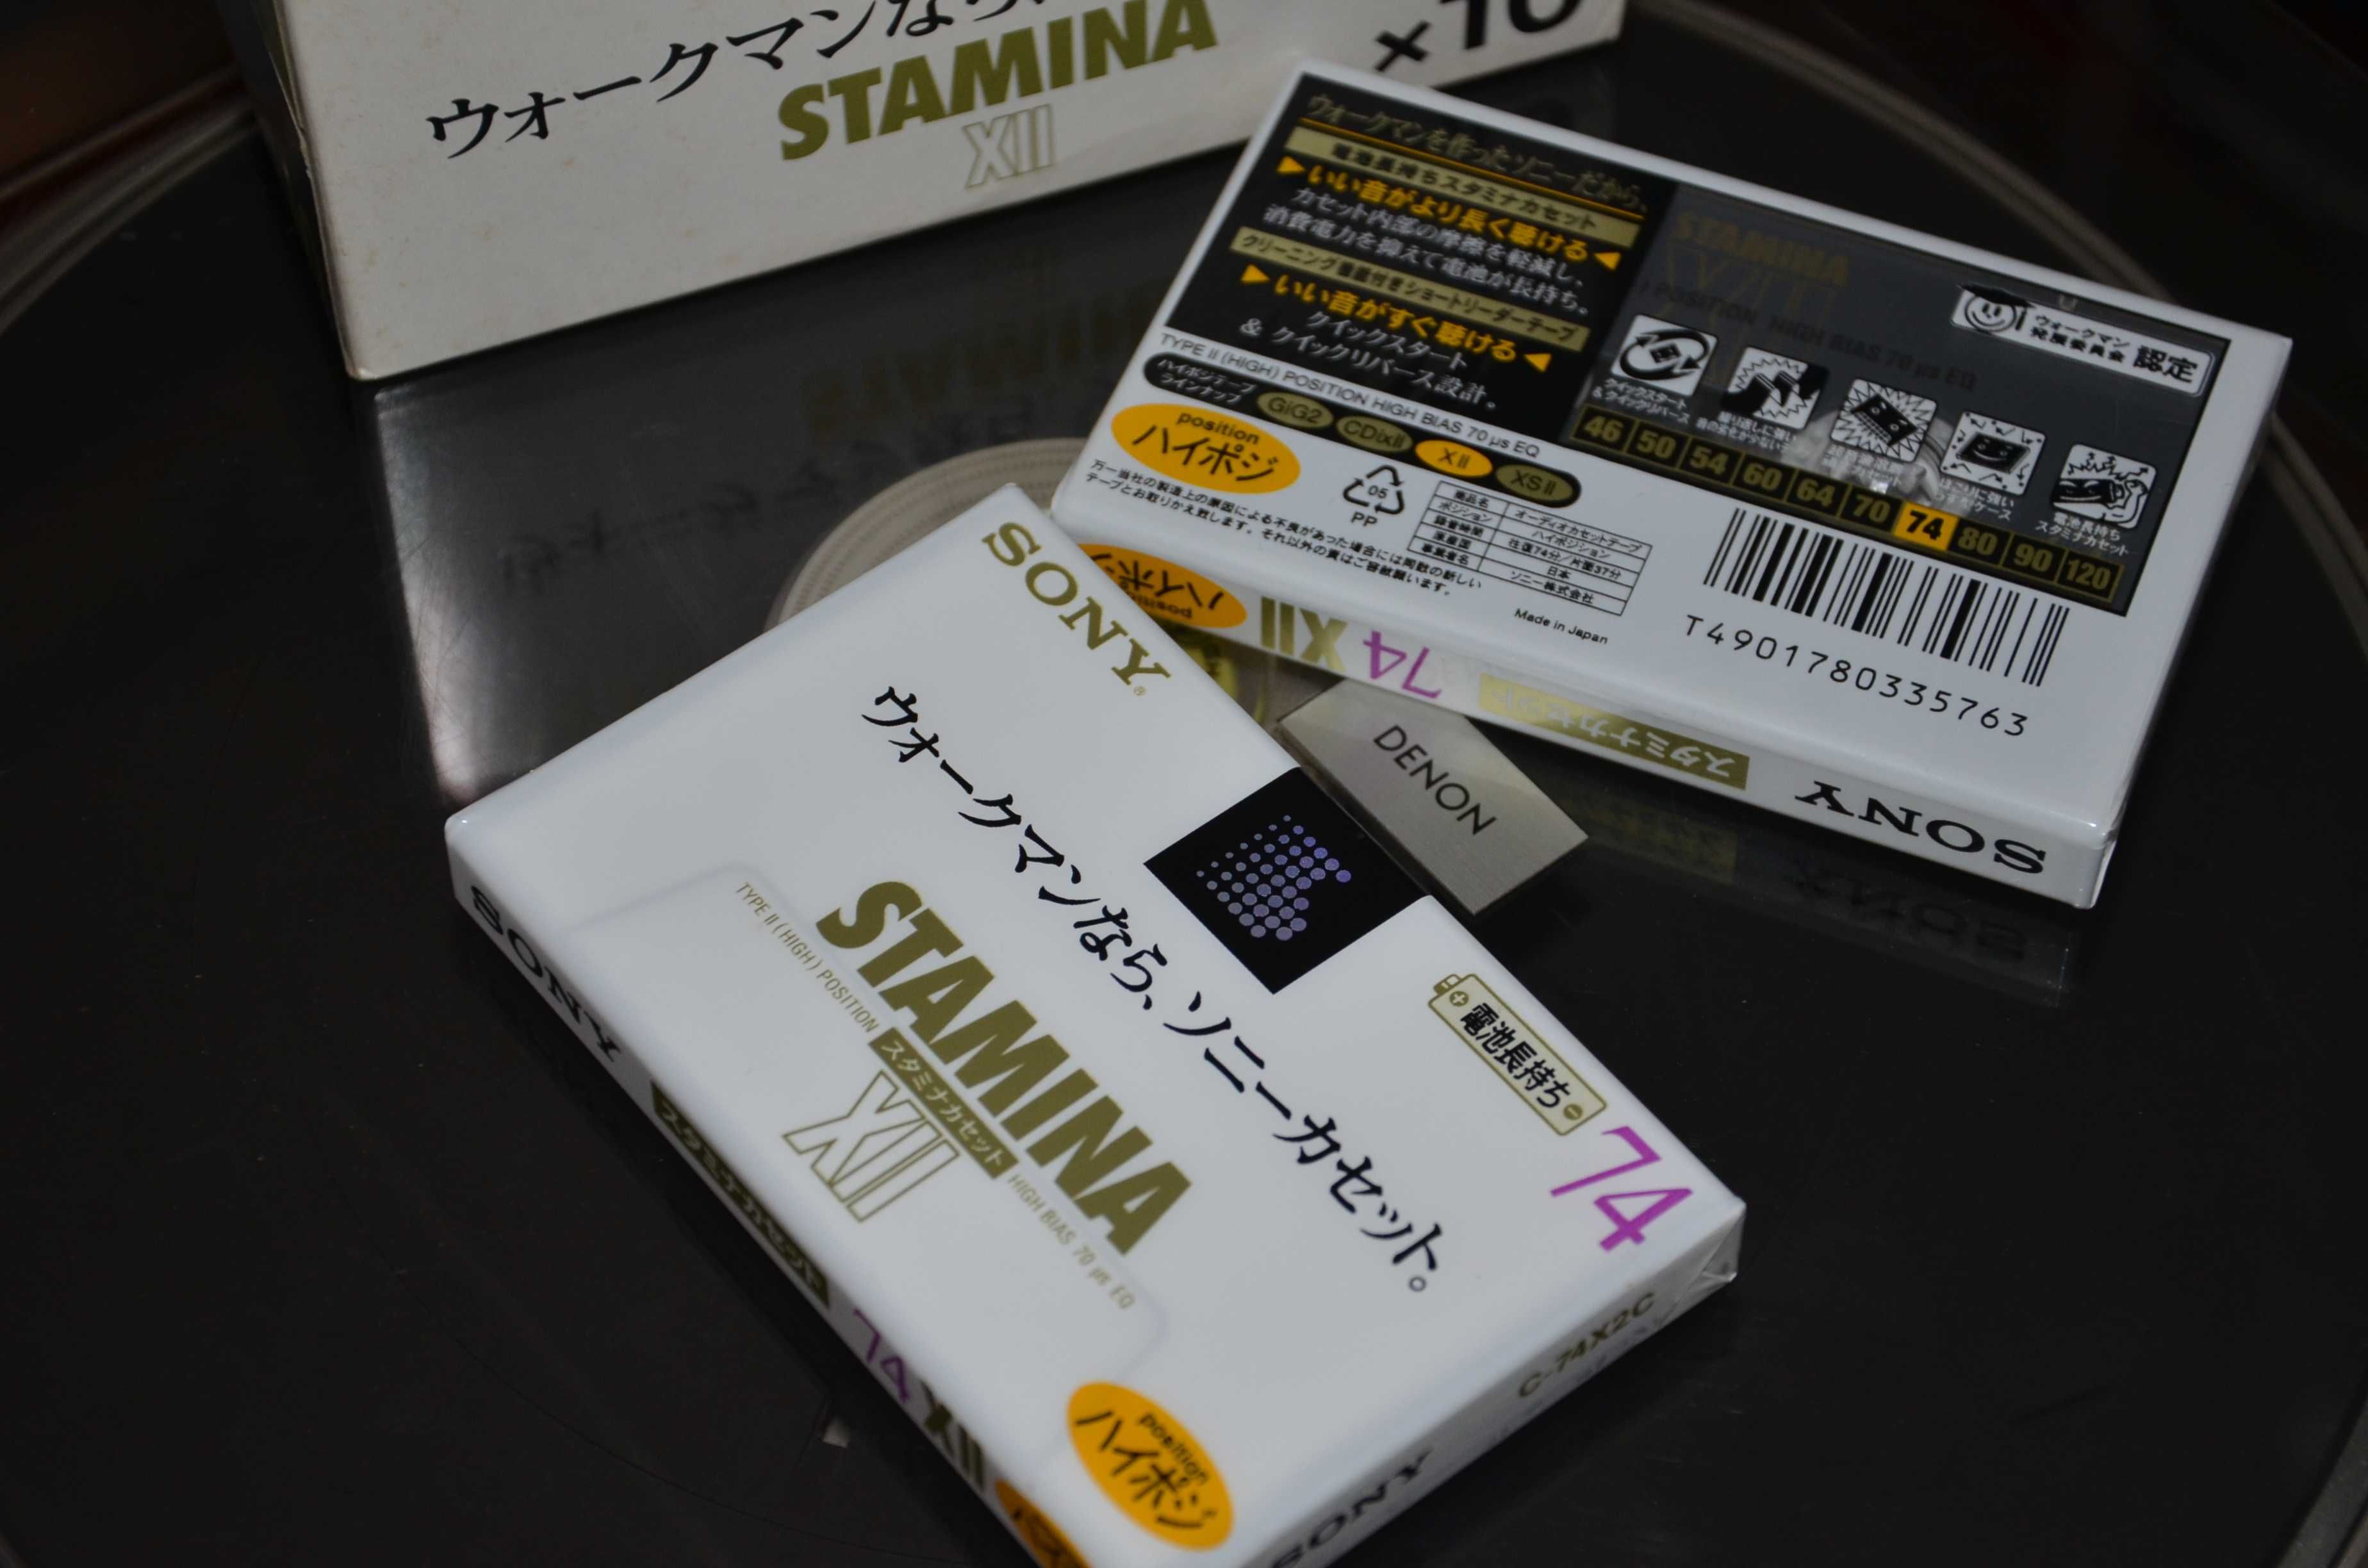 Новая аудиокассета SONY Stamina XII 74 мин Made in Japan (Идеал.Сост.)